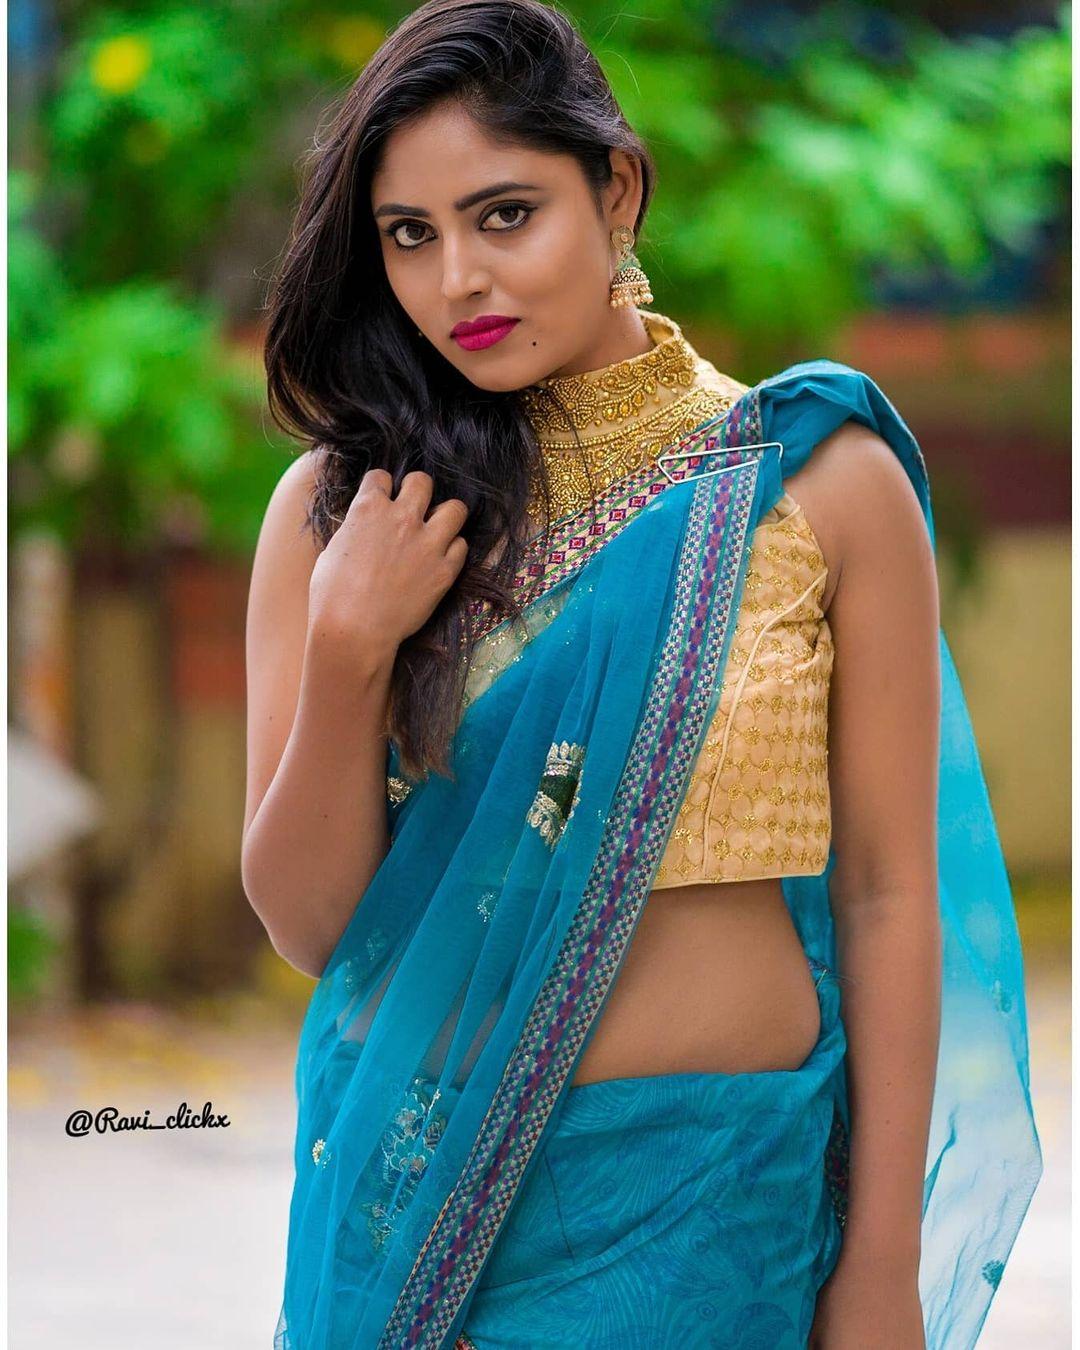 Telugu actress in saree hot photos | Mahi Maheshwari latest hot and sexy  stills Photos: HD Images, Pictures, Stills, First Look Posters of Telugu  actress in saree hot photos | Mahi Maheshwari